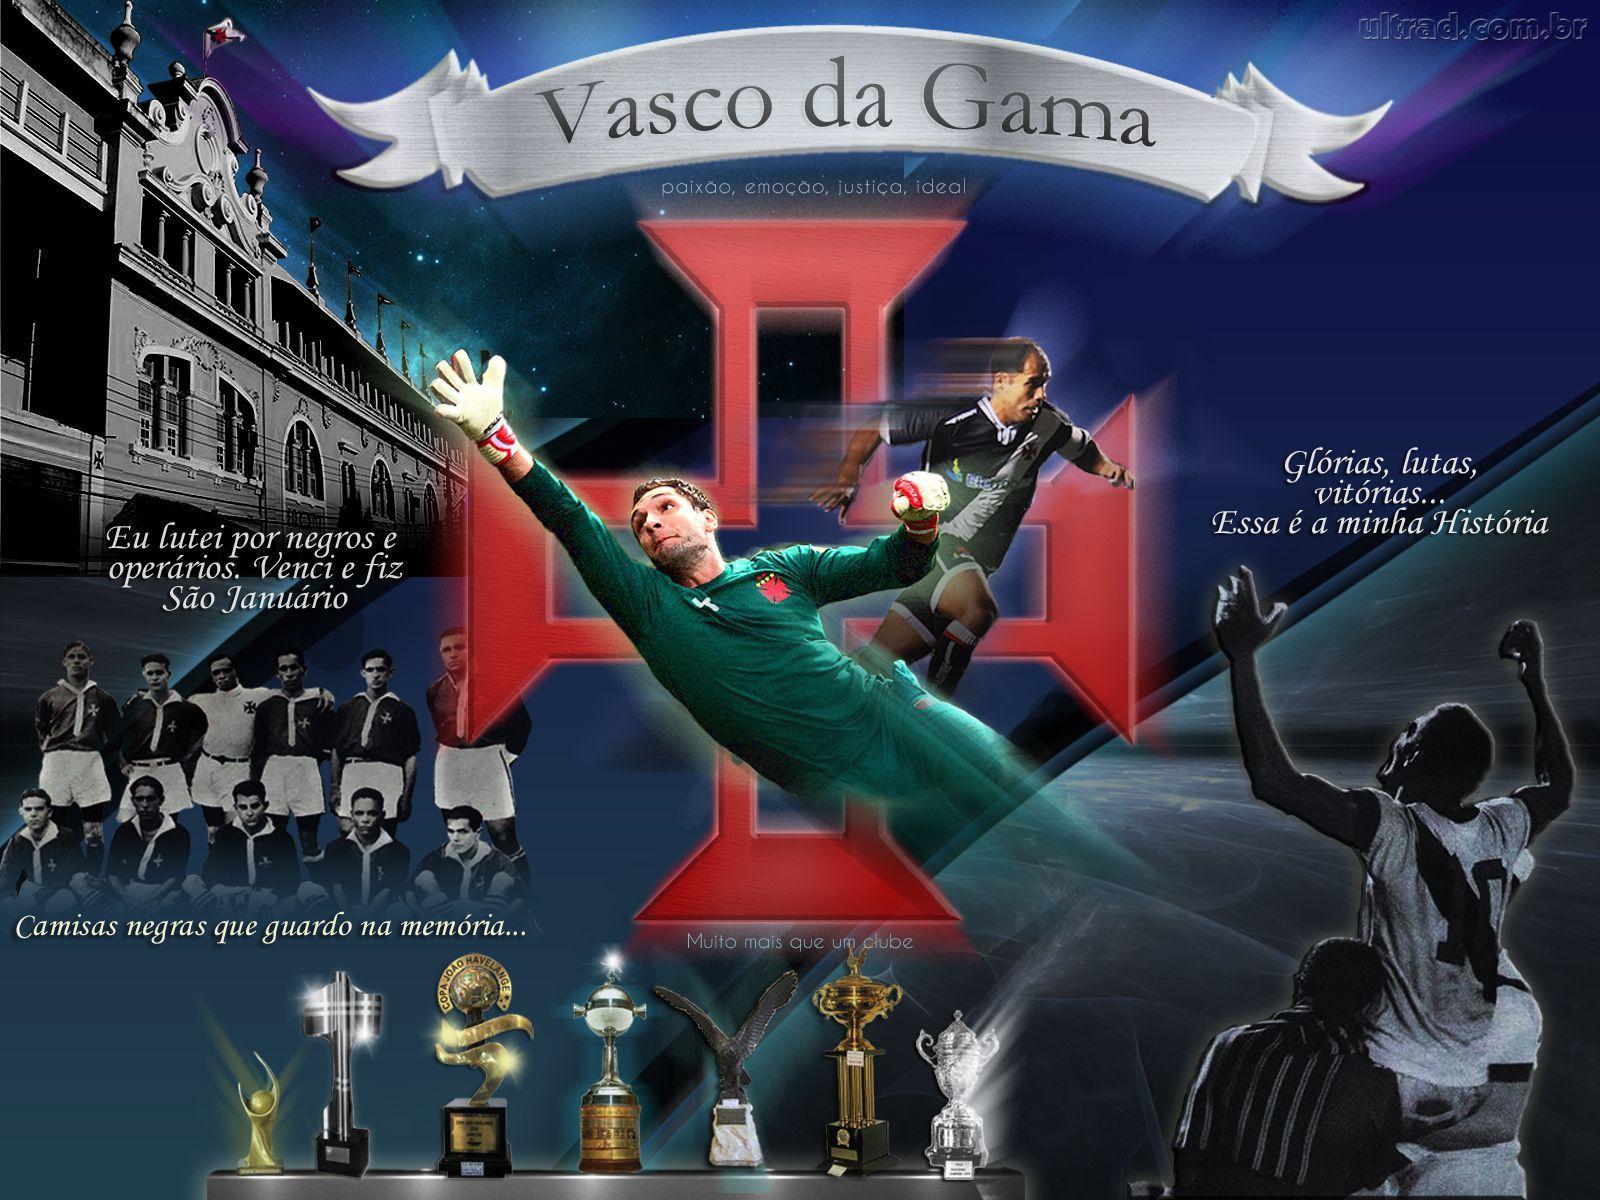 Vasco da Gama. C. R. Vasco da Gama